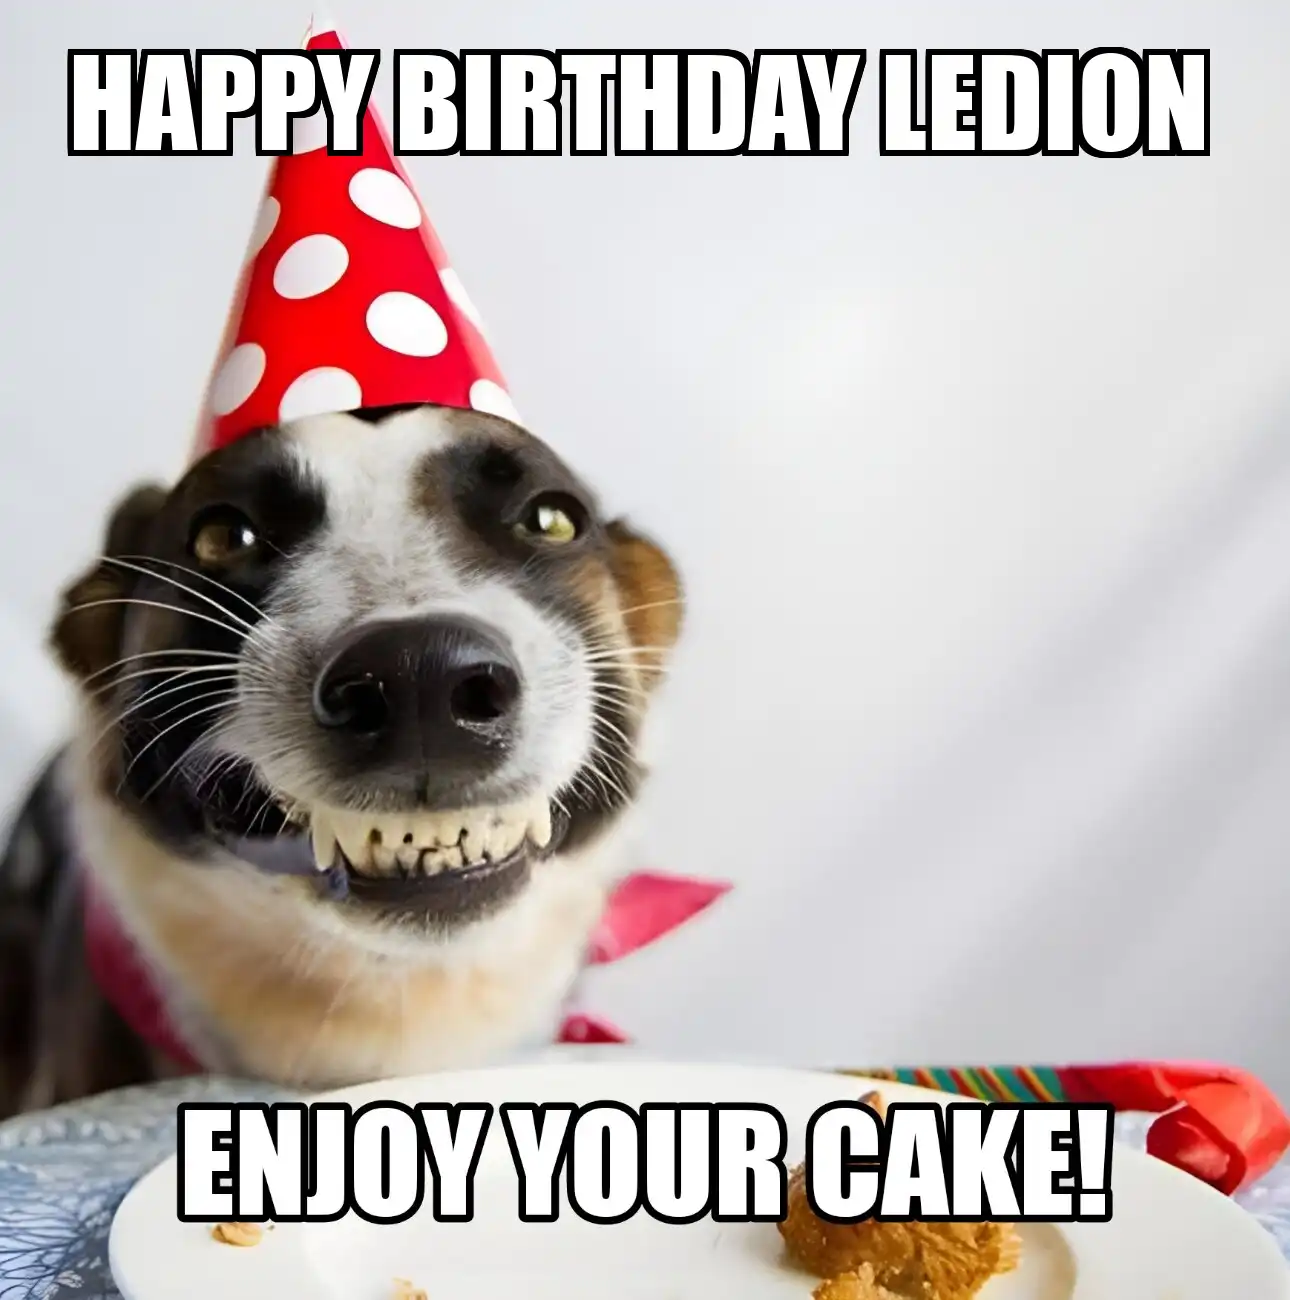 Happy Birthday Ledion Enjoy Your Cake Dog Meme